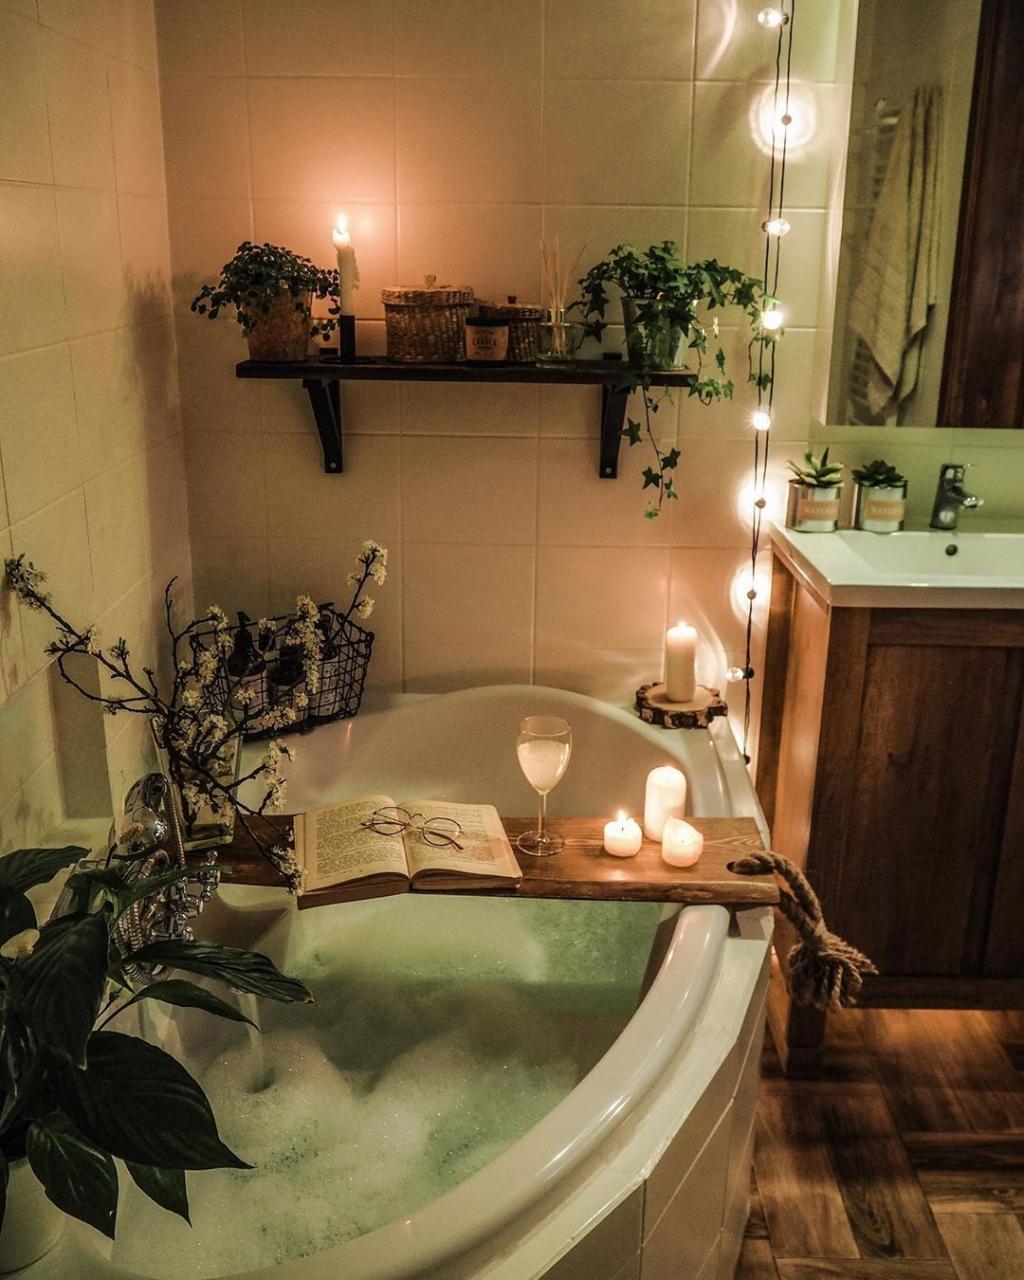 Ecoutery on Twitter in 2020 Bathtub decor, Romantic bathrooms, Rustic